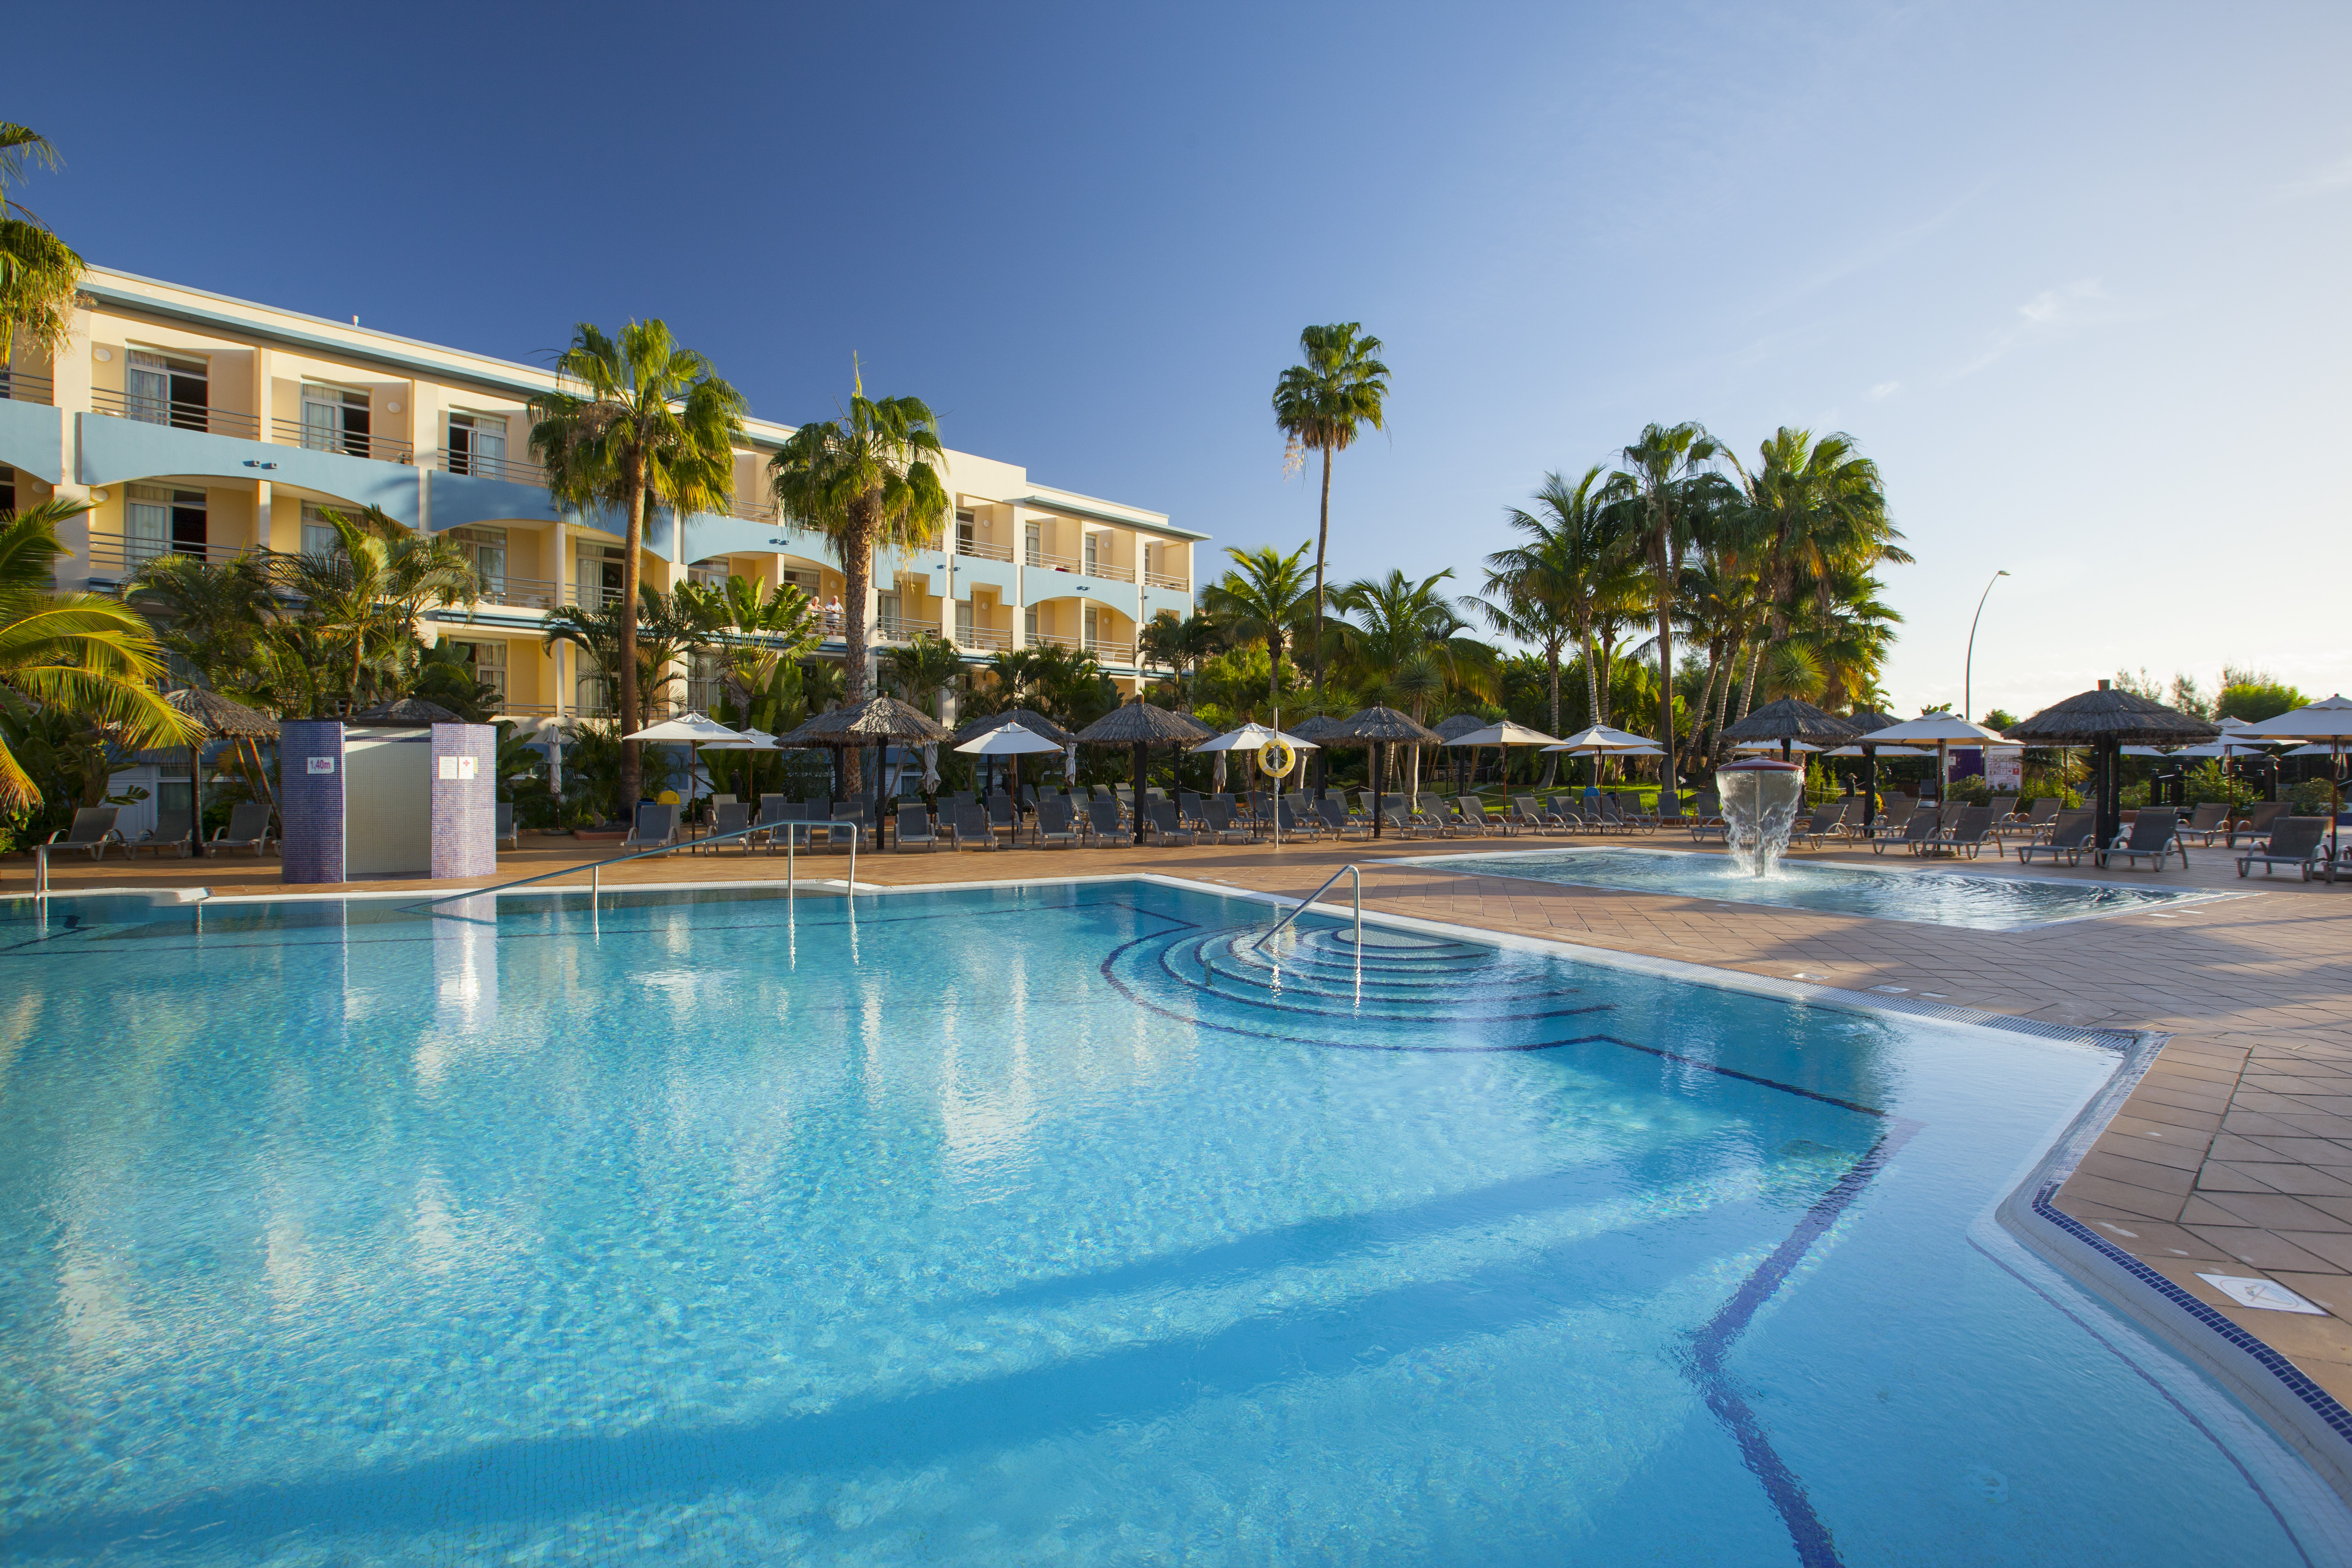 Hotel IFA Altamarena de Lopesan Hotel Group. Fuerteventura